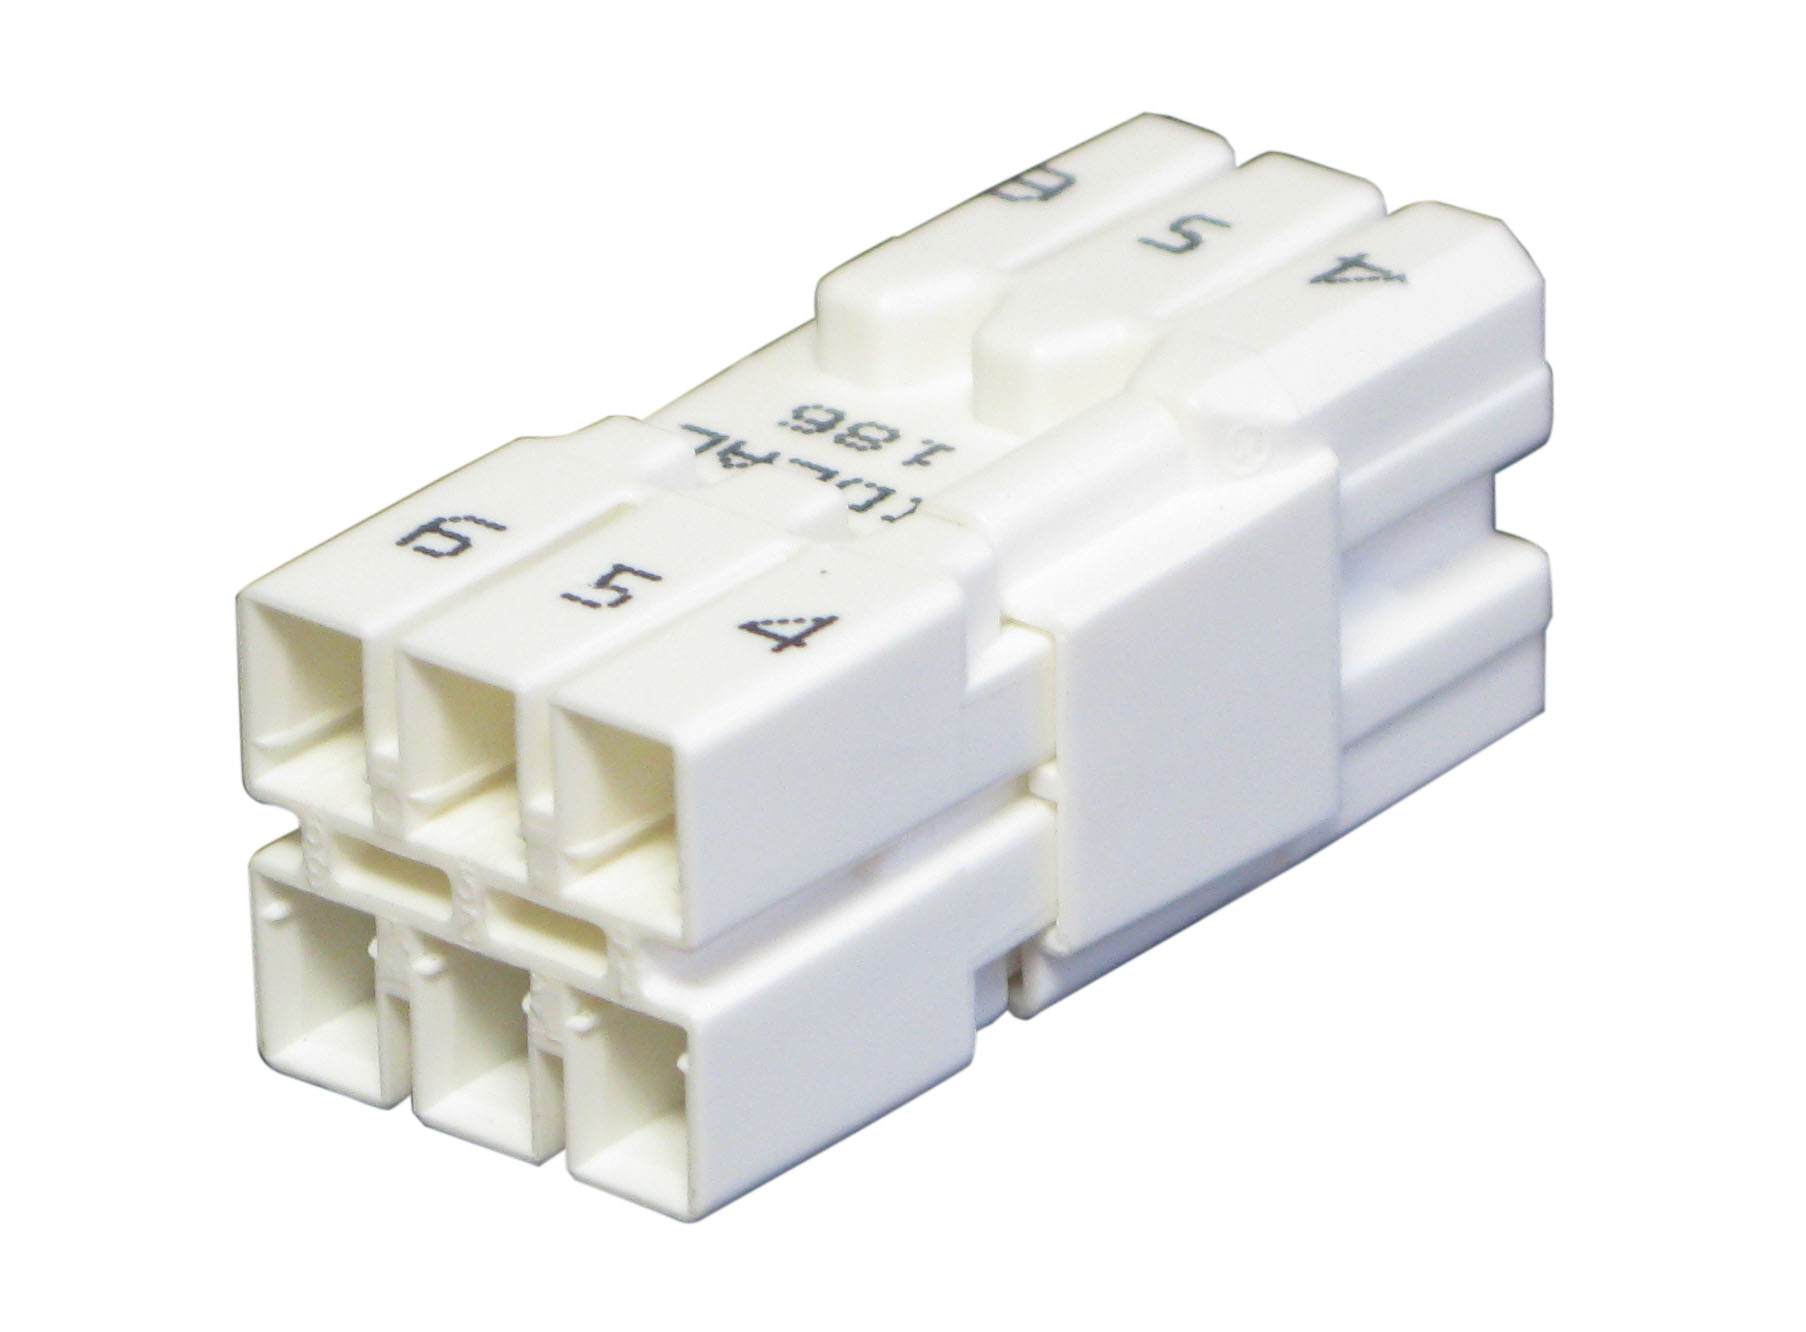 PowerPlug® Luminaire Disconnect, Model 186 Male, Box of 2,000